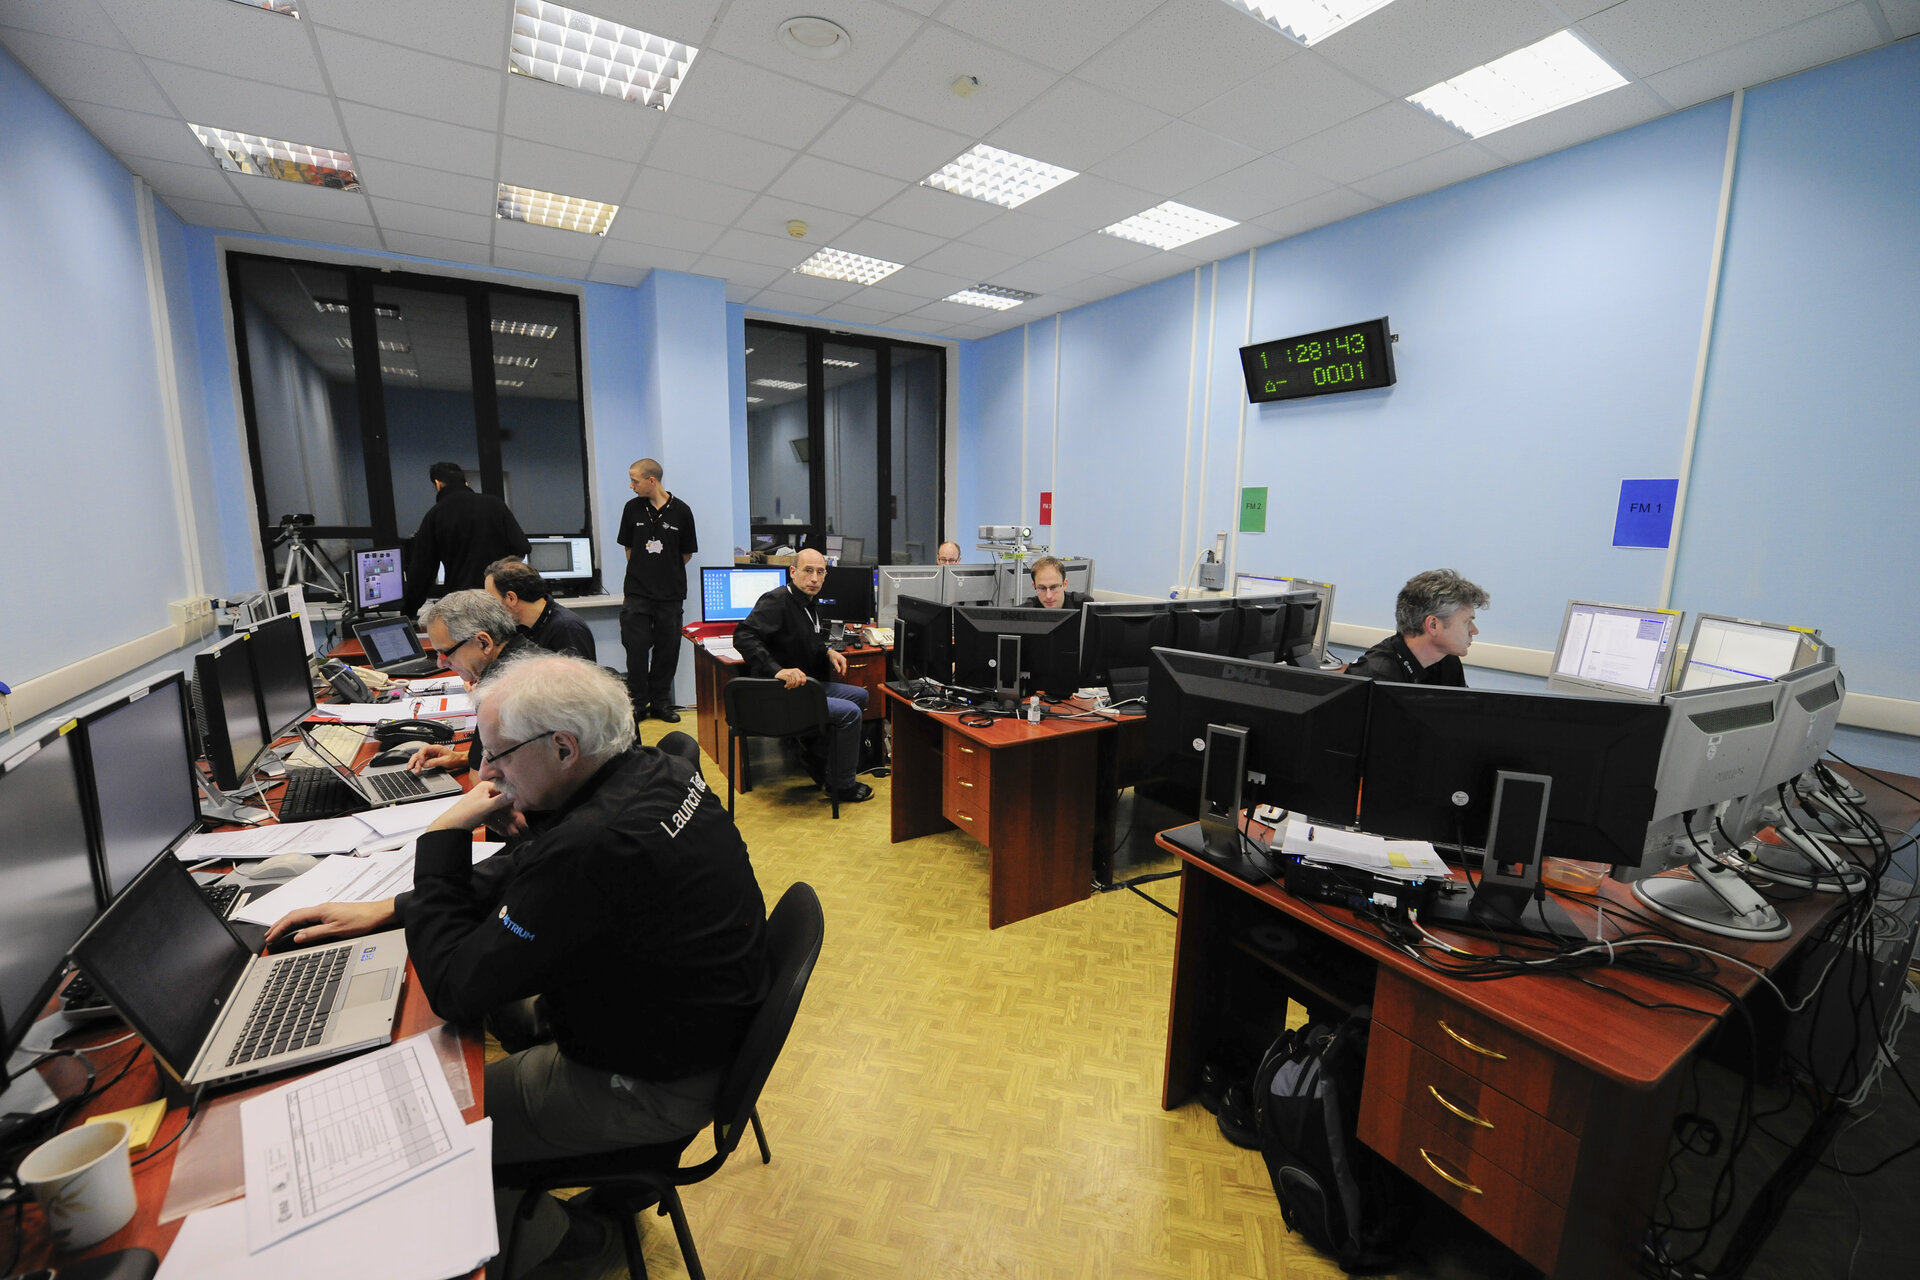 Swarm satellites control room in MIK, Plesetsk cosmodrome